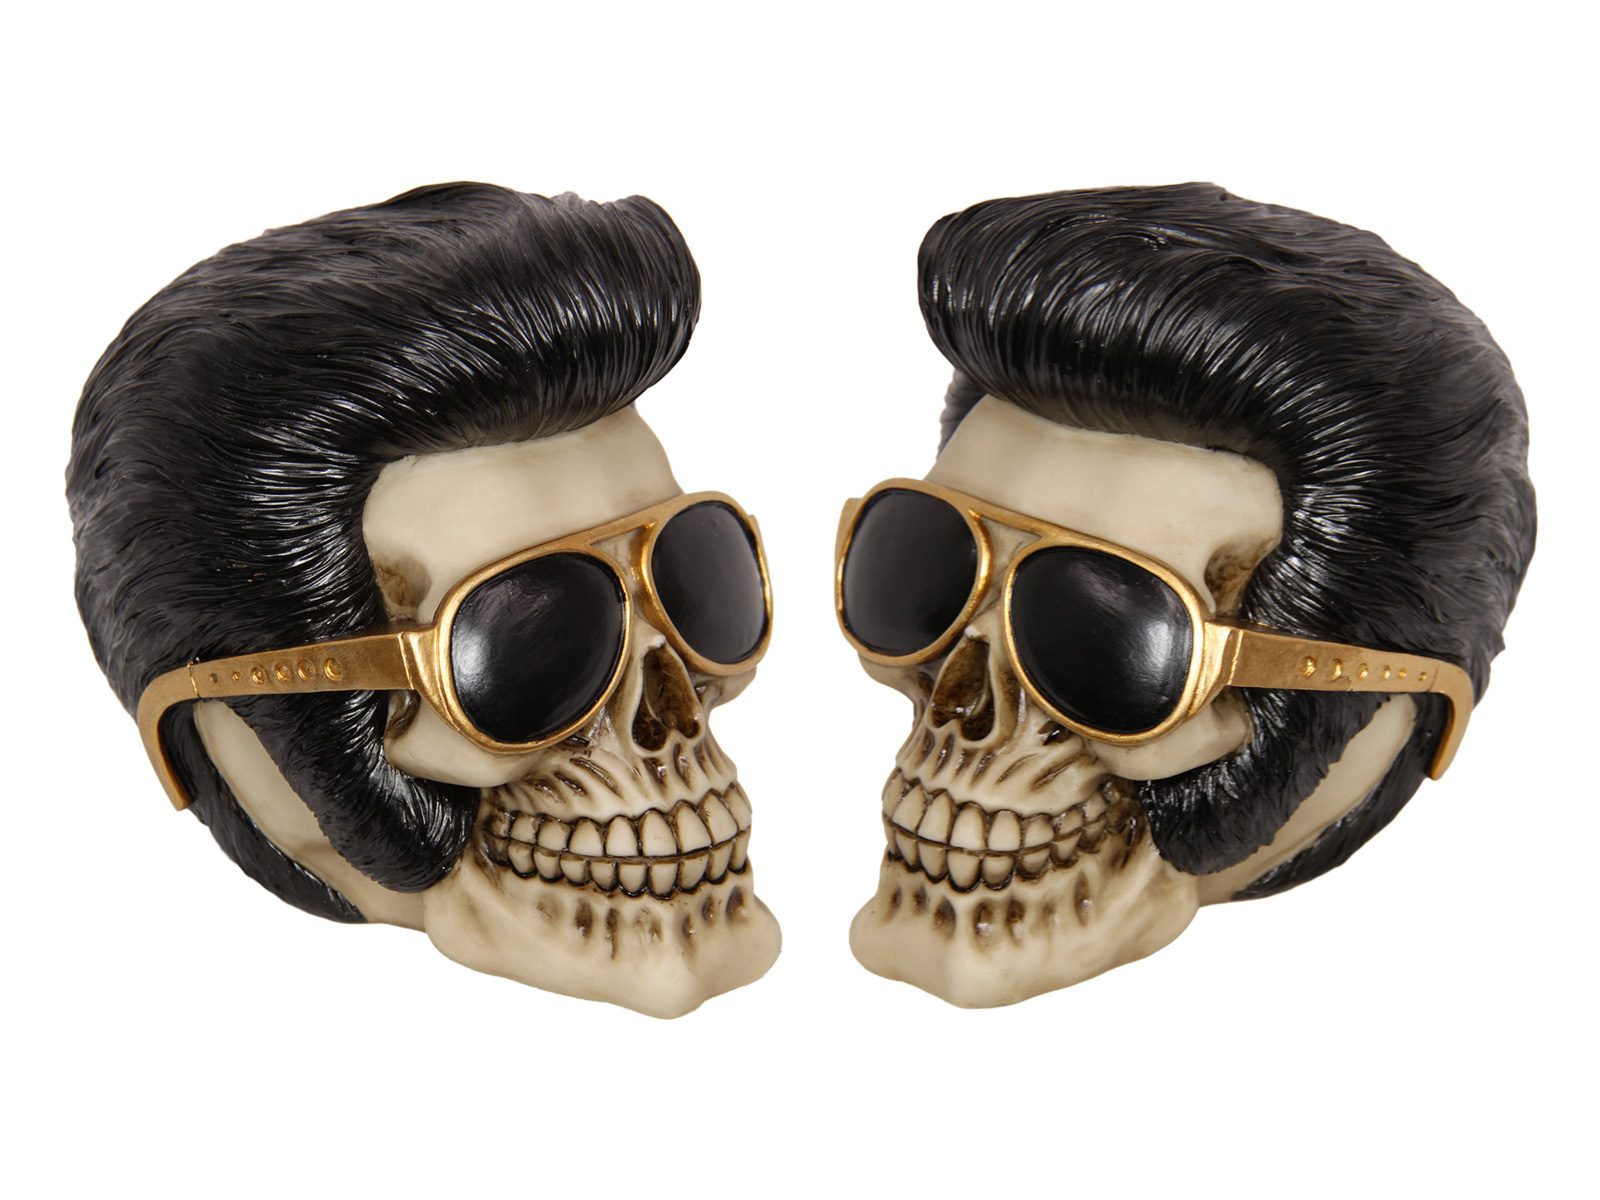 New 1pce 14cm Mystical Skull Resin Ornament Candy Human Head Mancave 